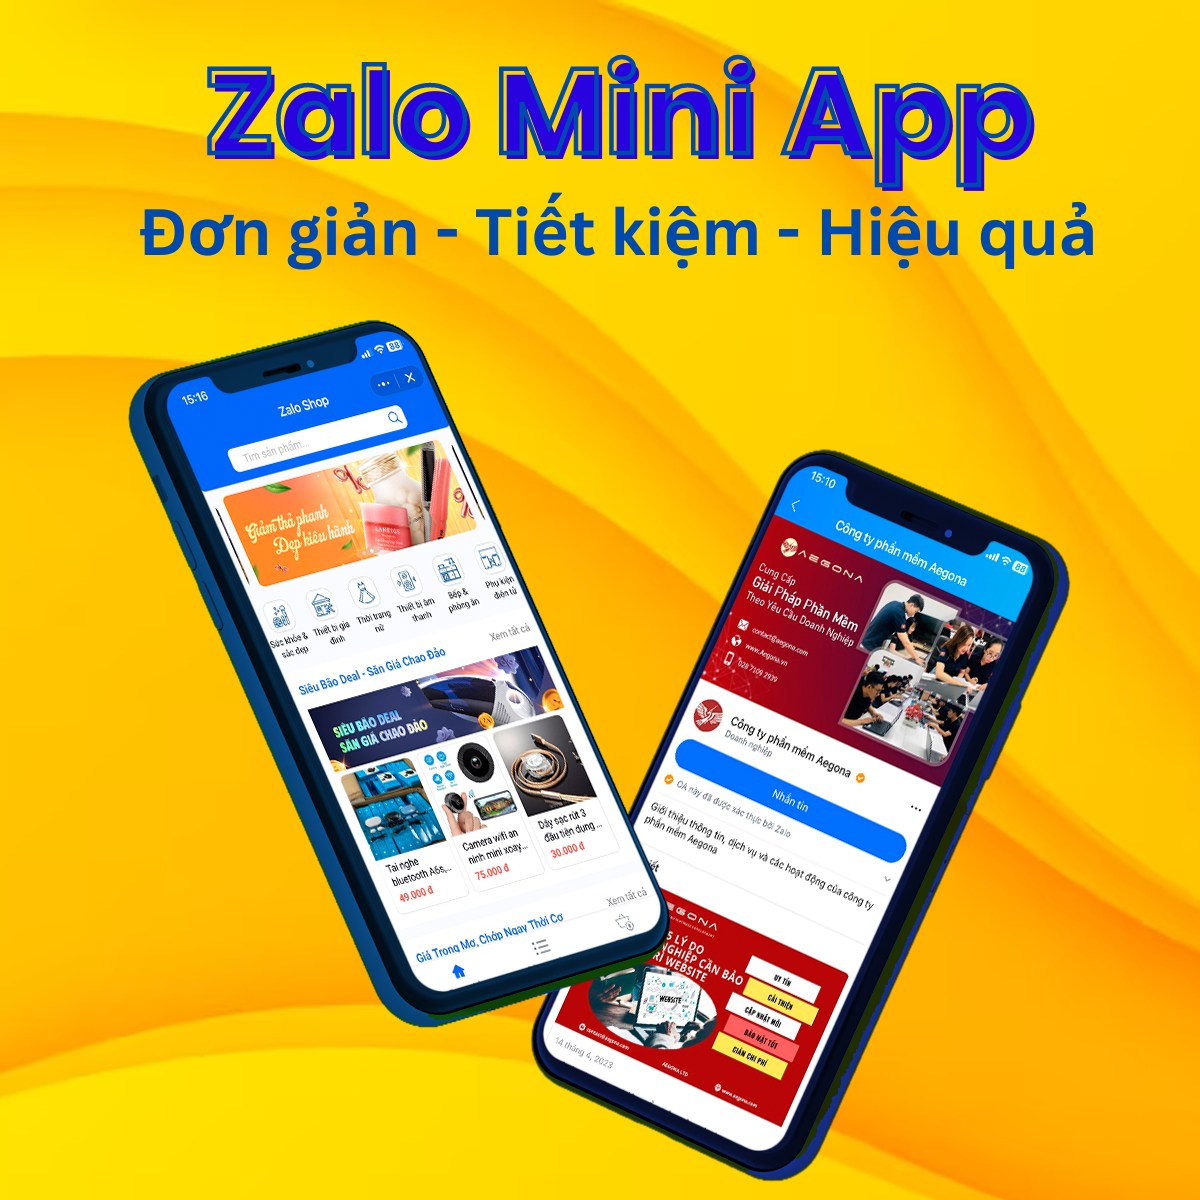 Phát triển Zalo Mini App